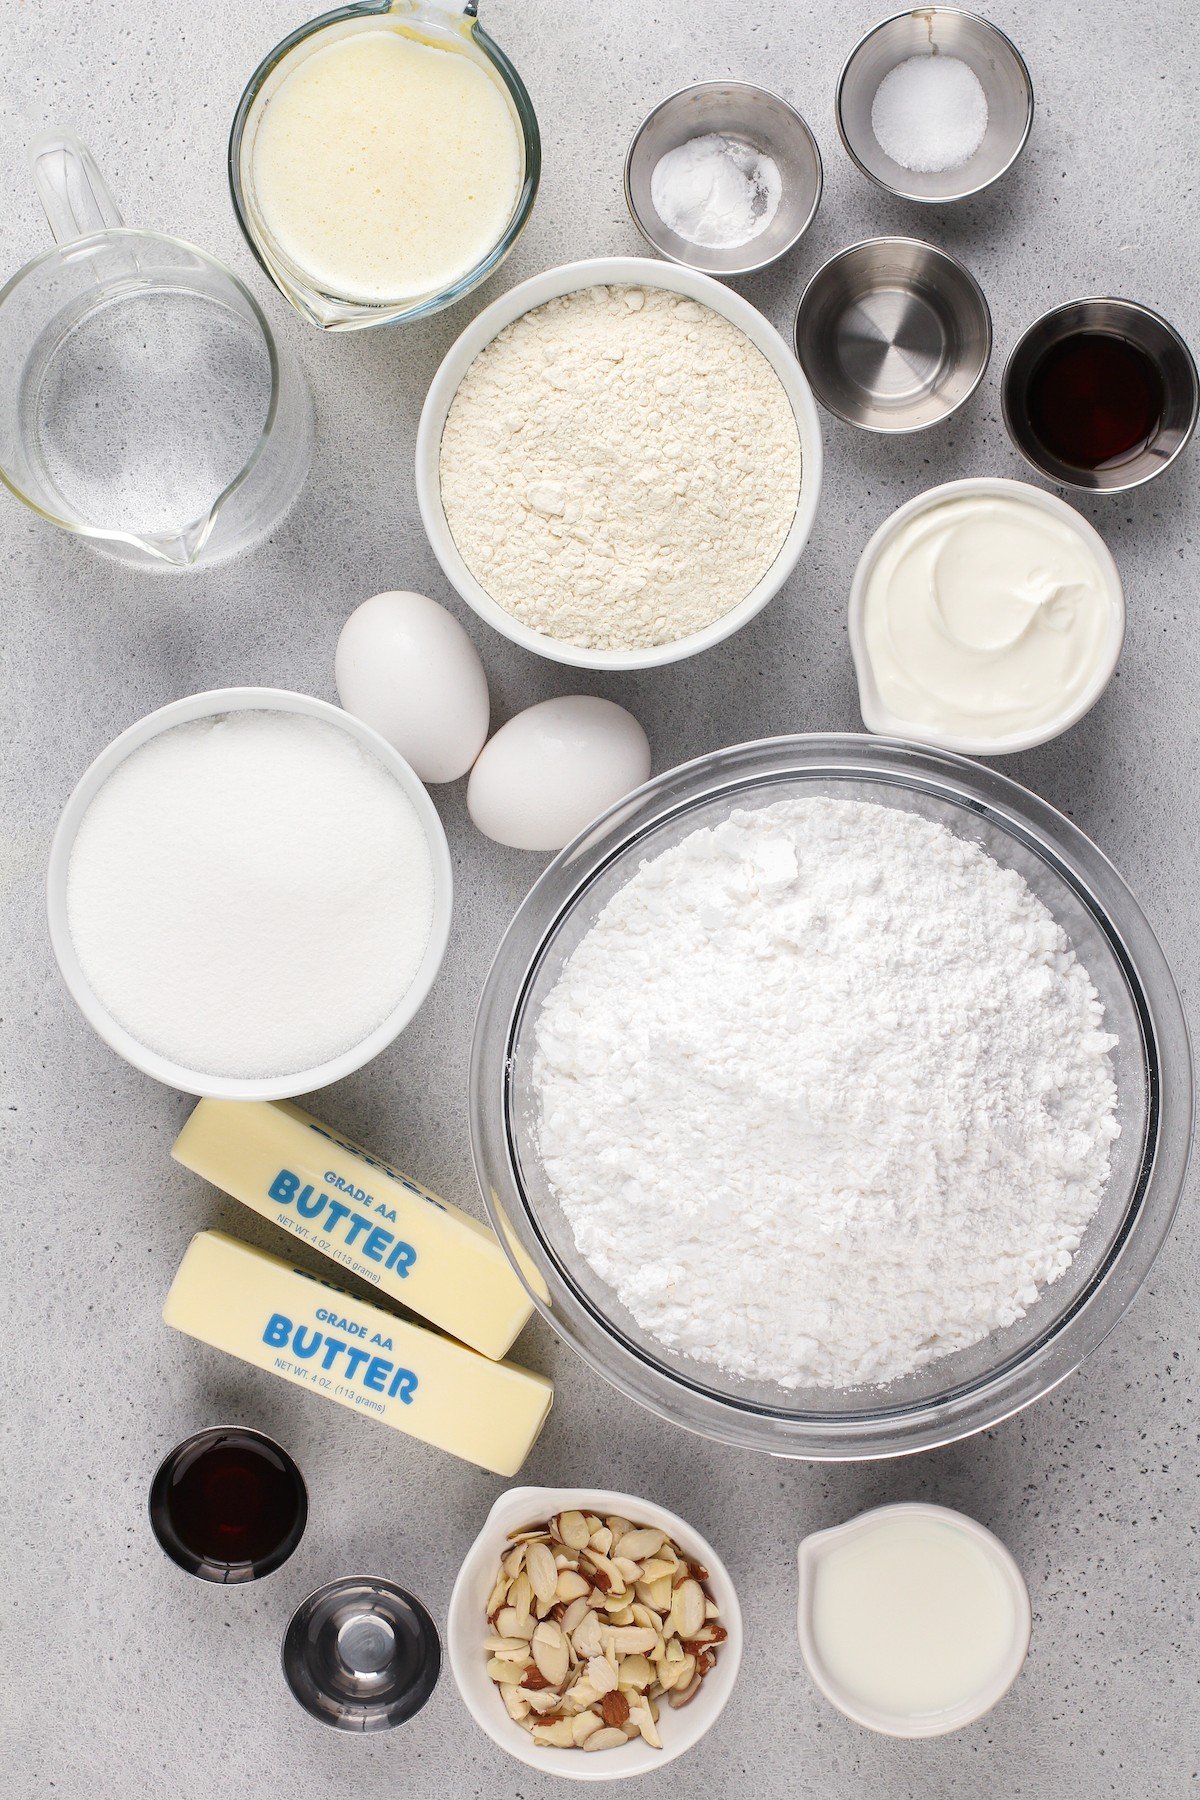 Ingredients for white Texas sheet cake.